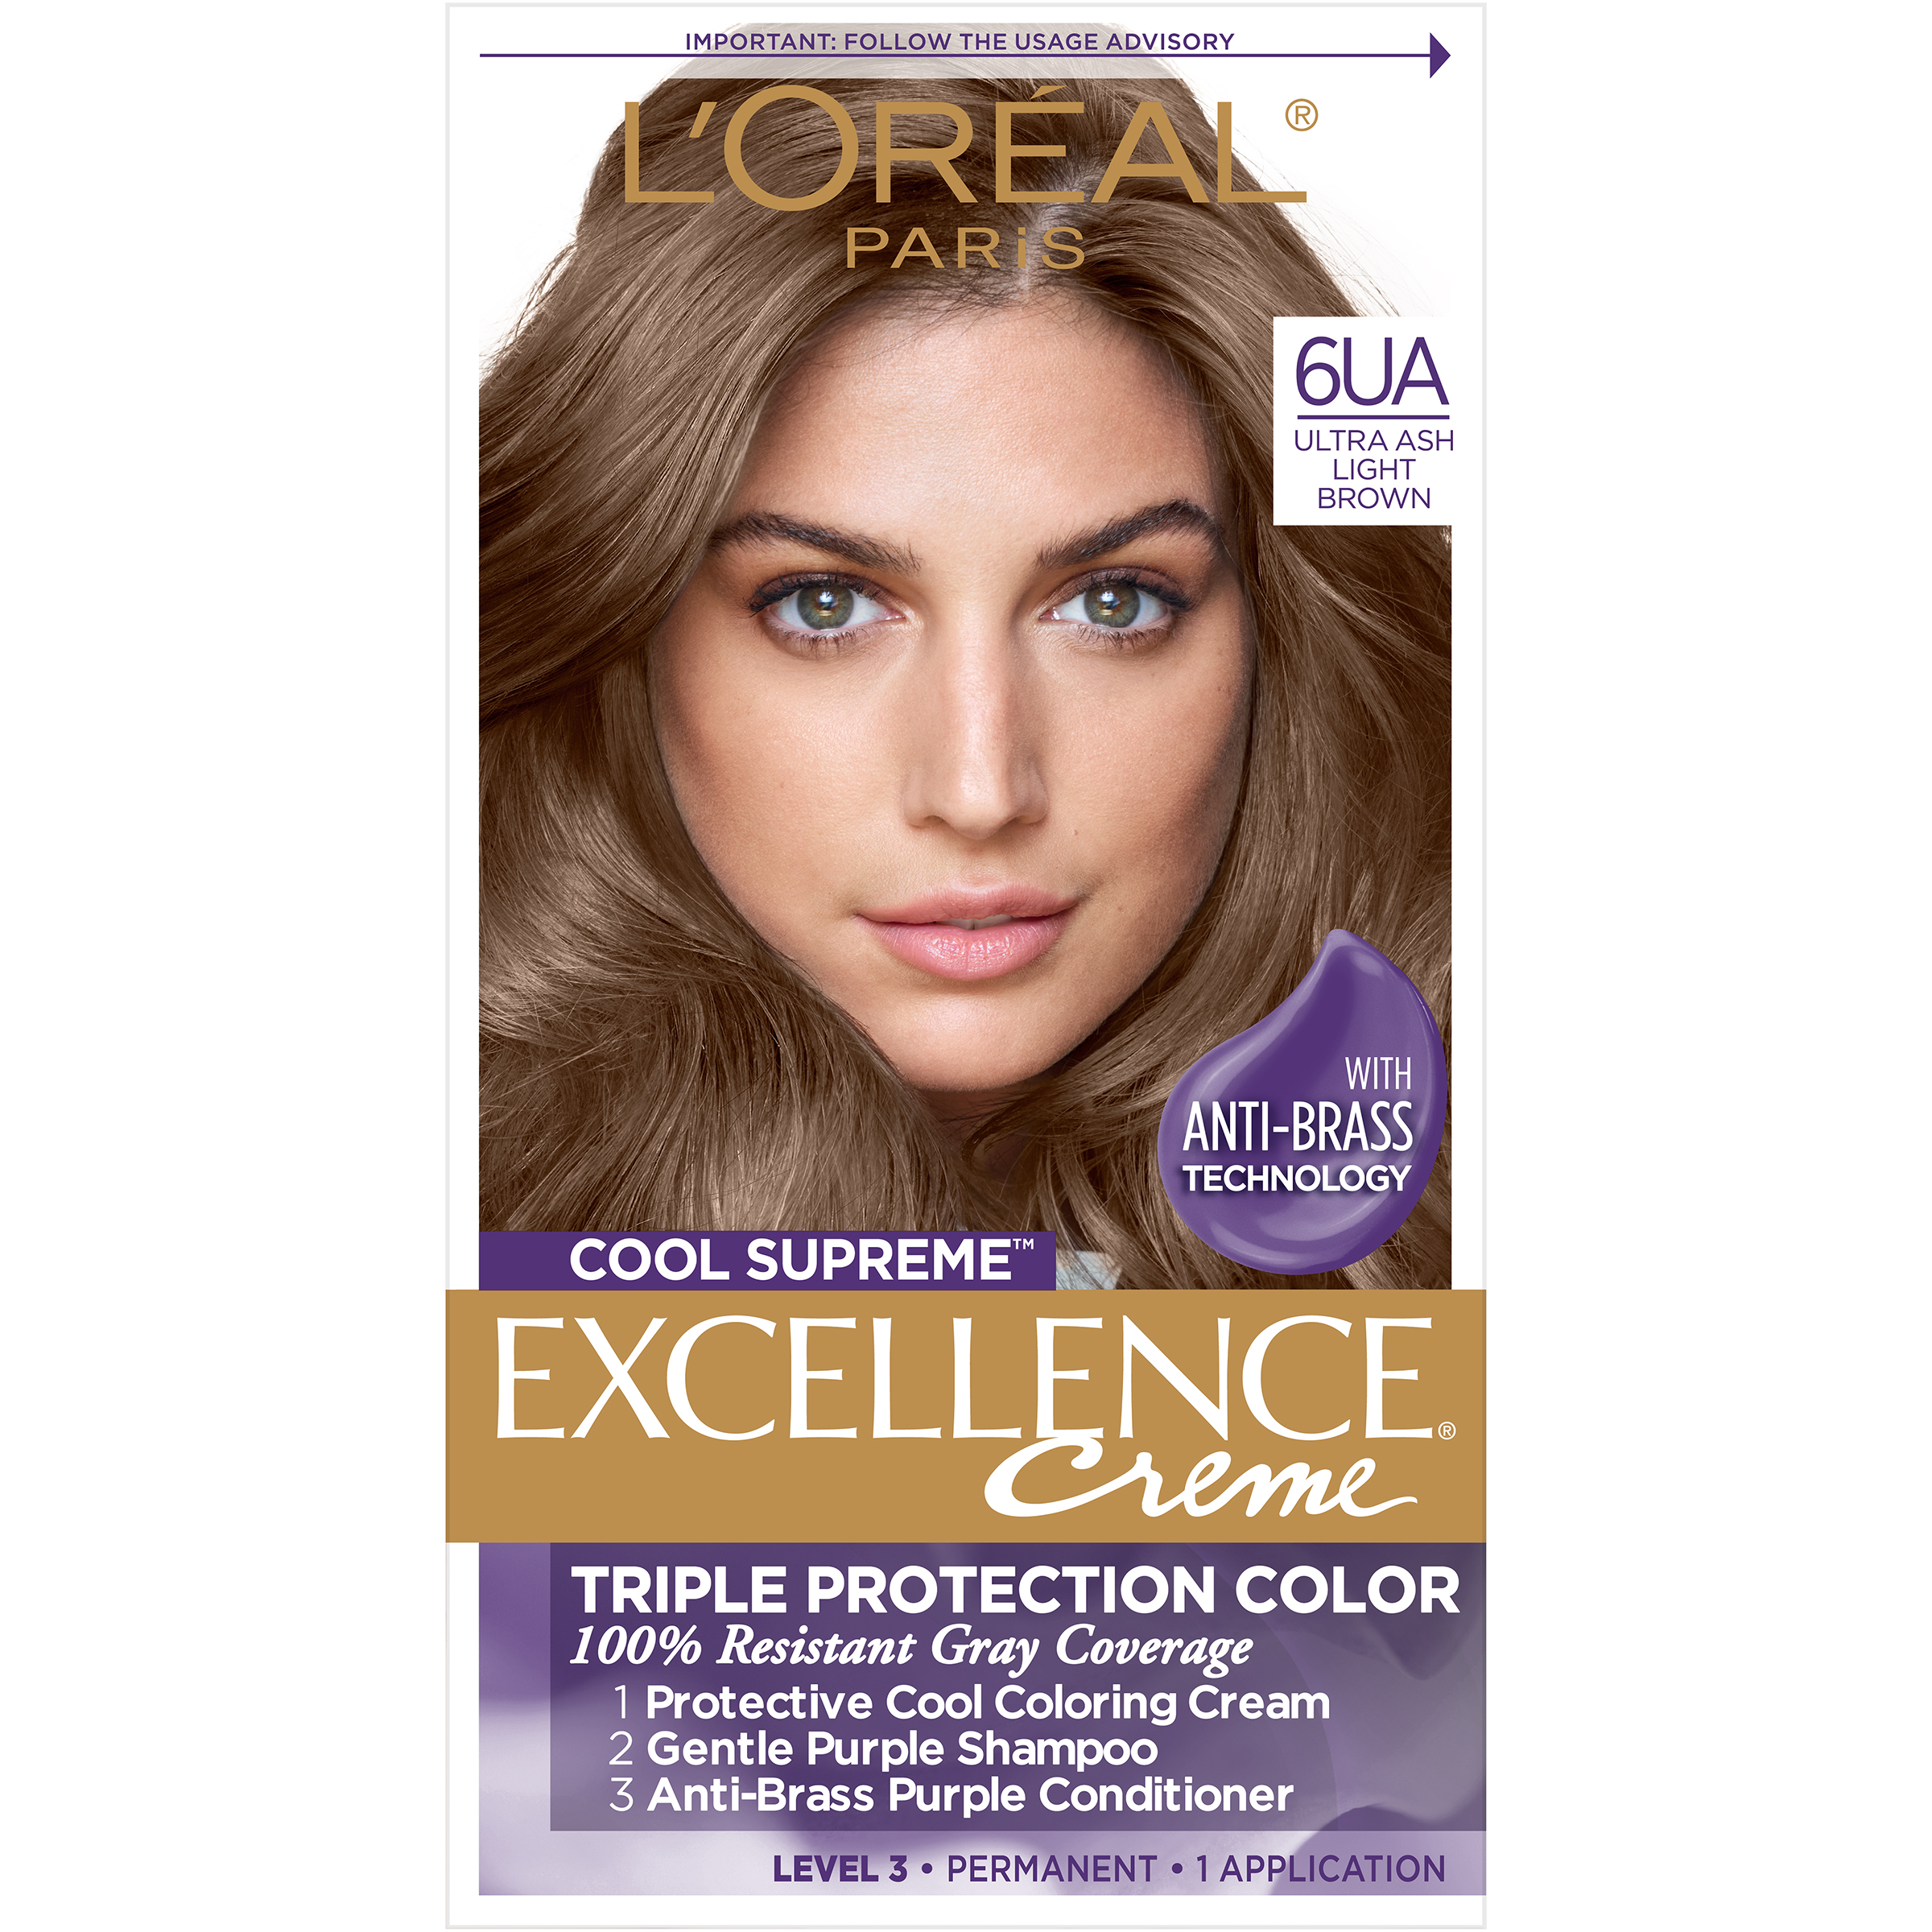 L'Oreal Paris Excellence Creme Permanent Hair Color, Ultra Ash Light Brown - image 1 of 9